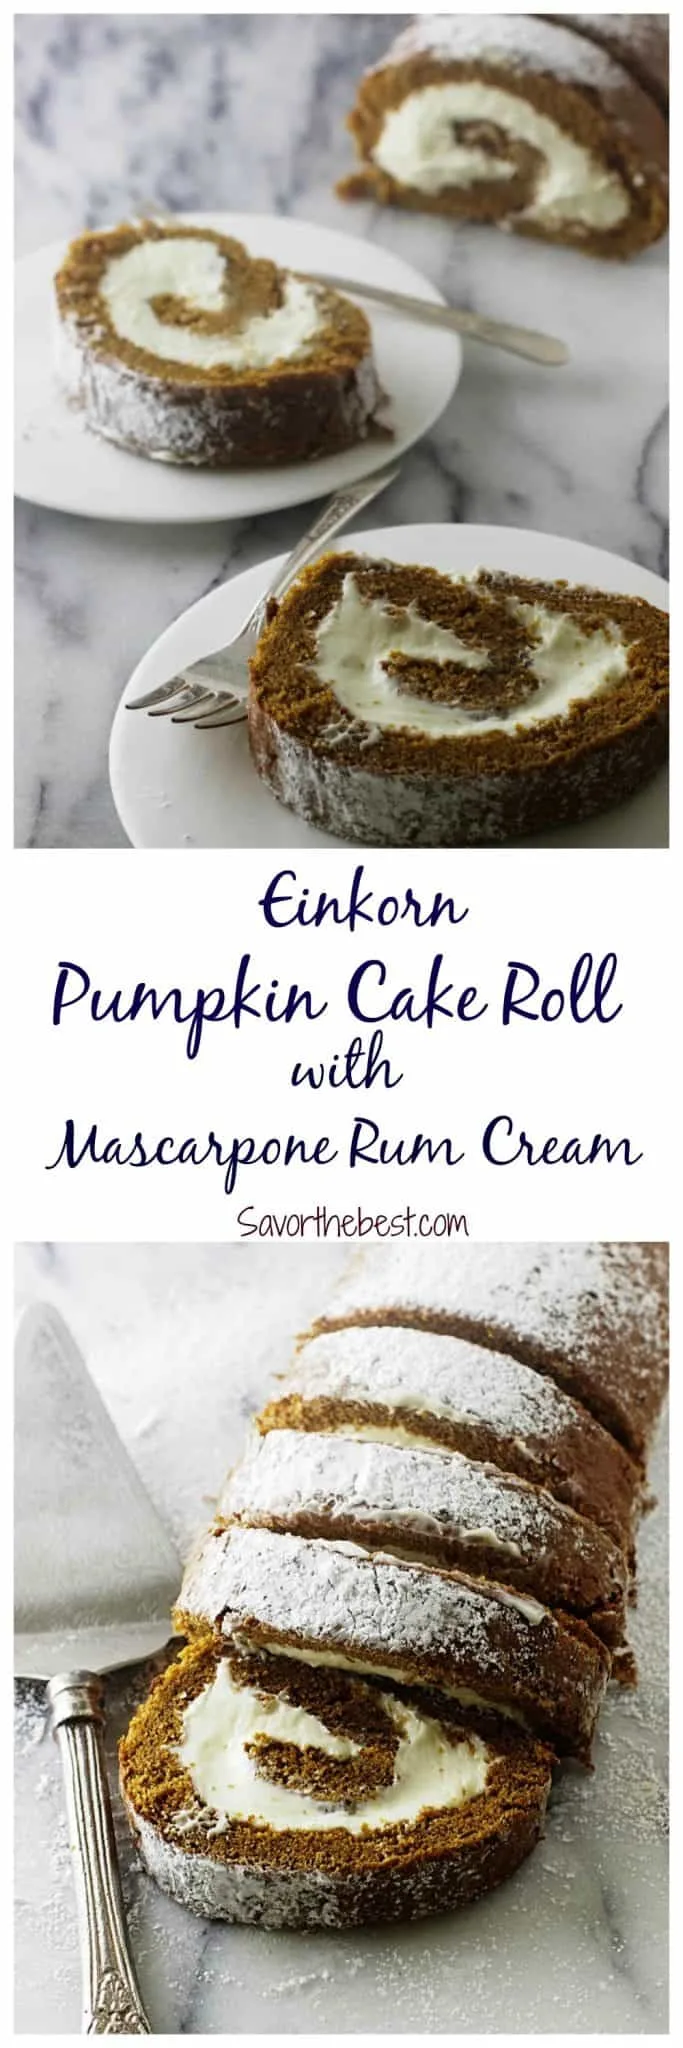 pumpkin cake roll with mascarpone rum cream